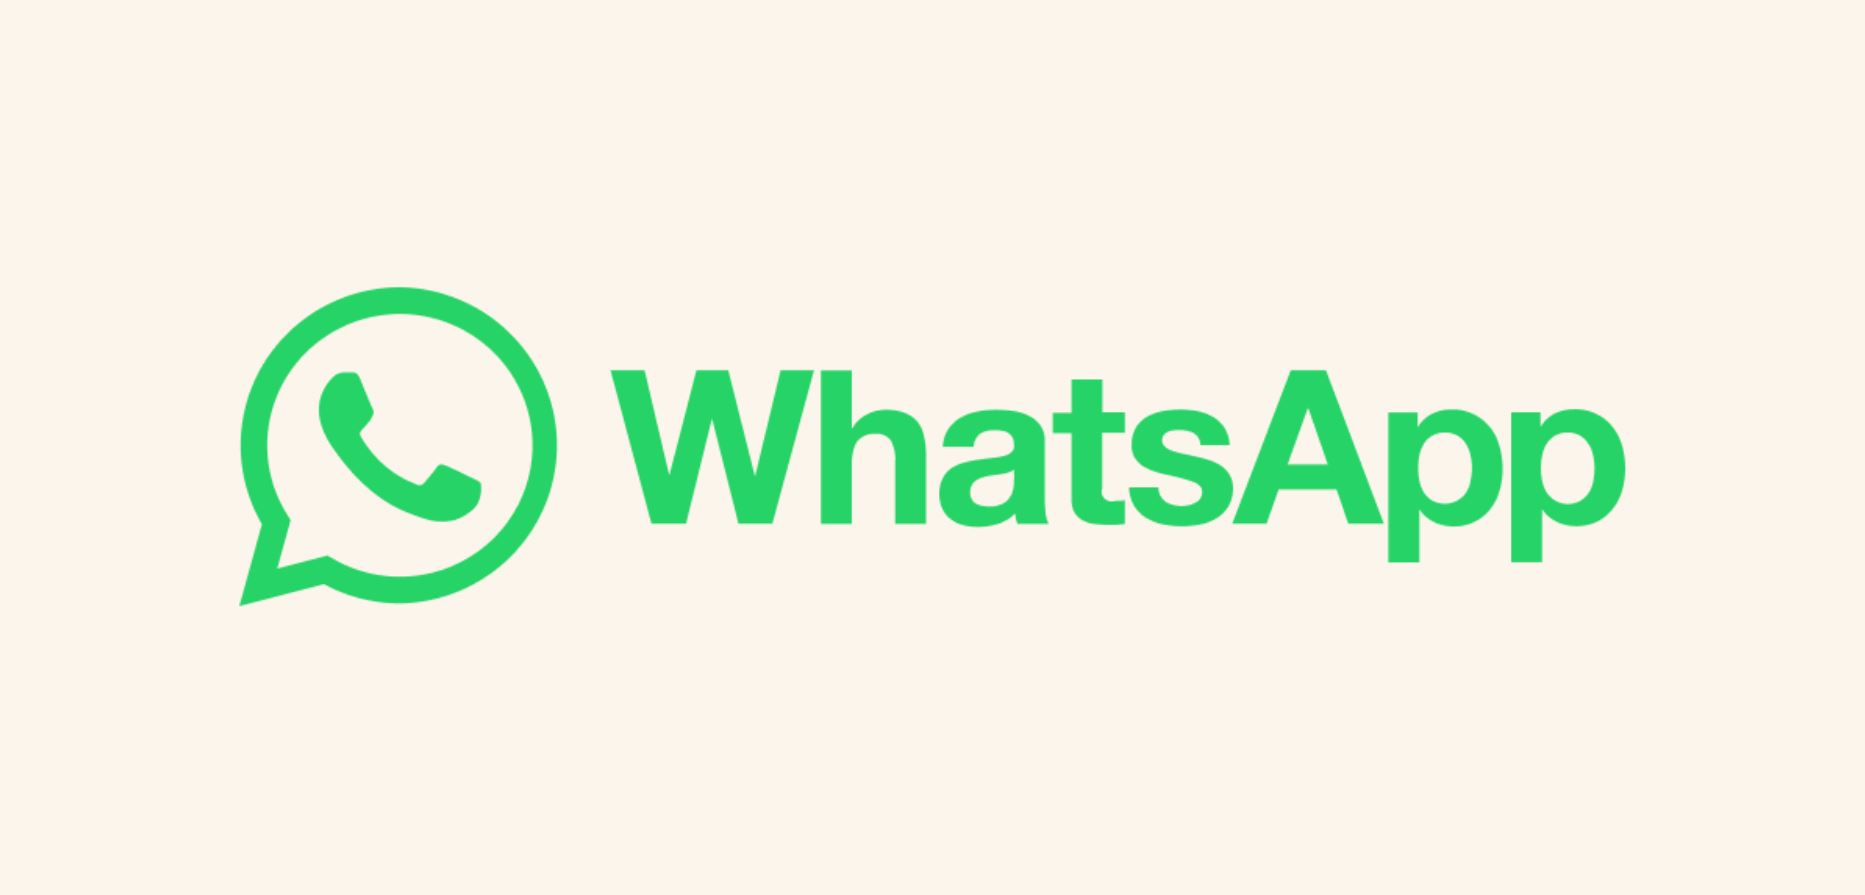 WhatsApp เปิดตัวแชตบอต AI โดยเพิ่ม shortcut ใหม่ในเวอร์ชัน beta ให้ผู้ใช้เข้าถึงง่ายขึ้น